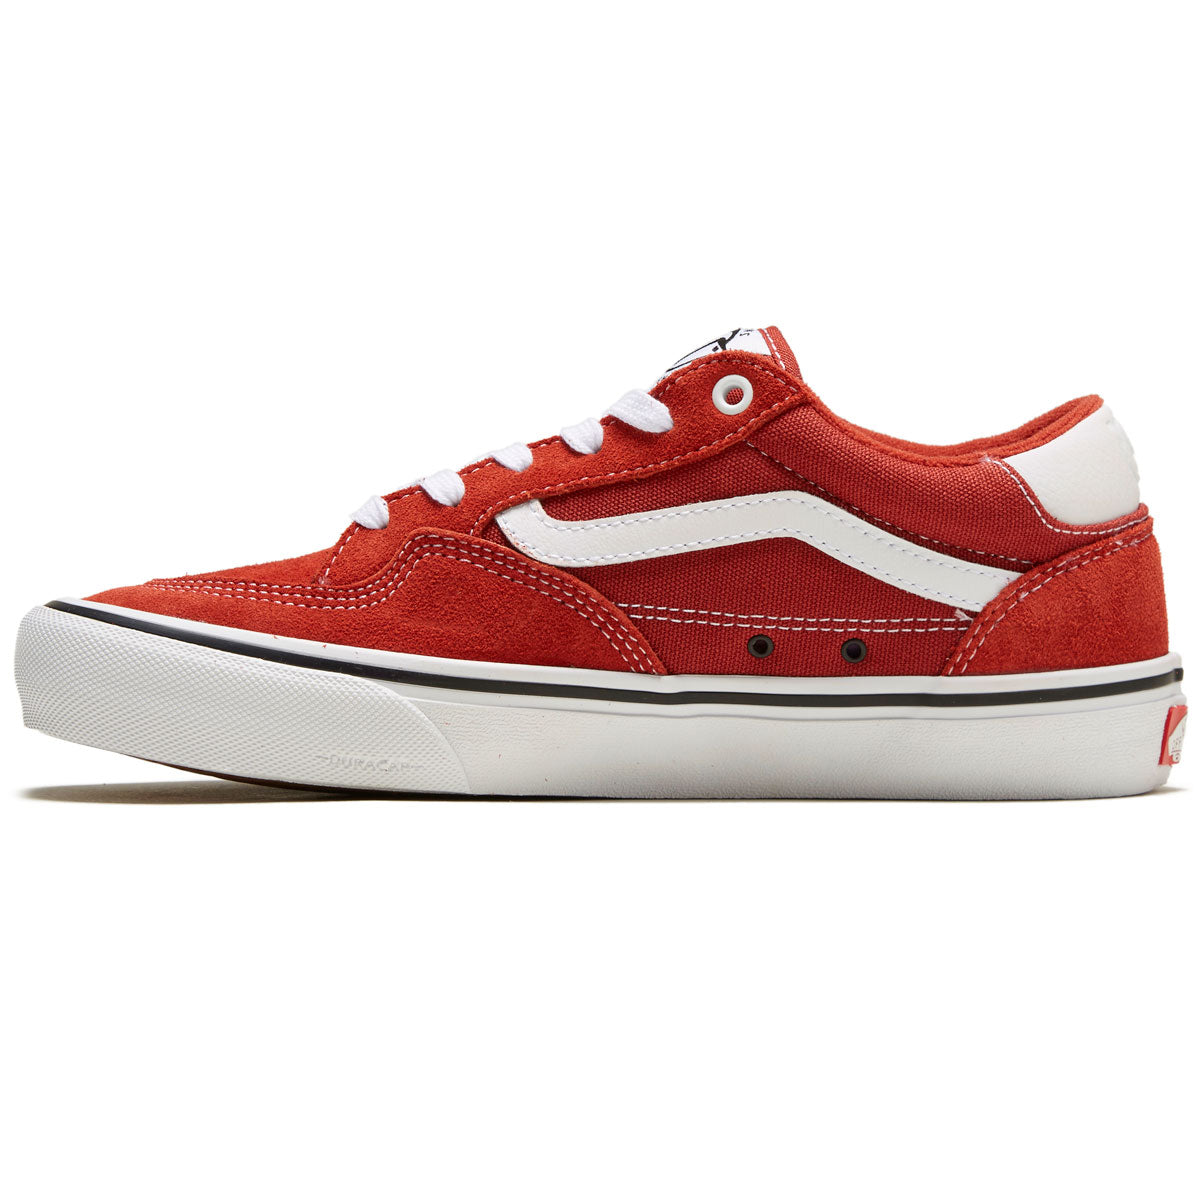 Vans Rowan Shoes - Red/White image 2